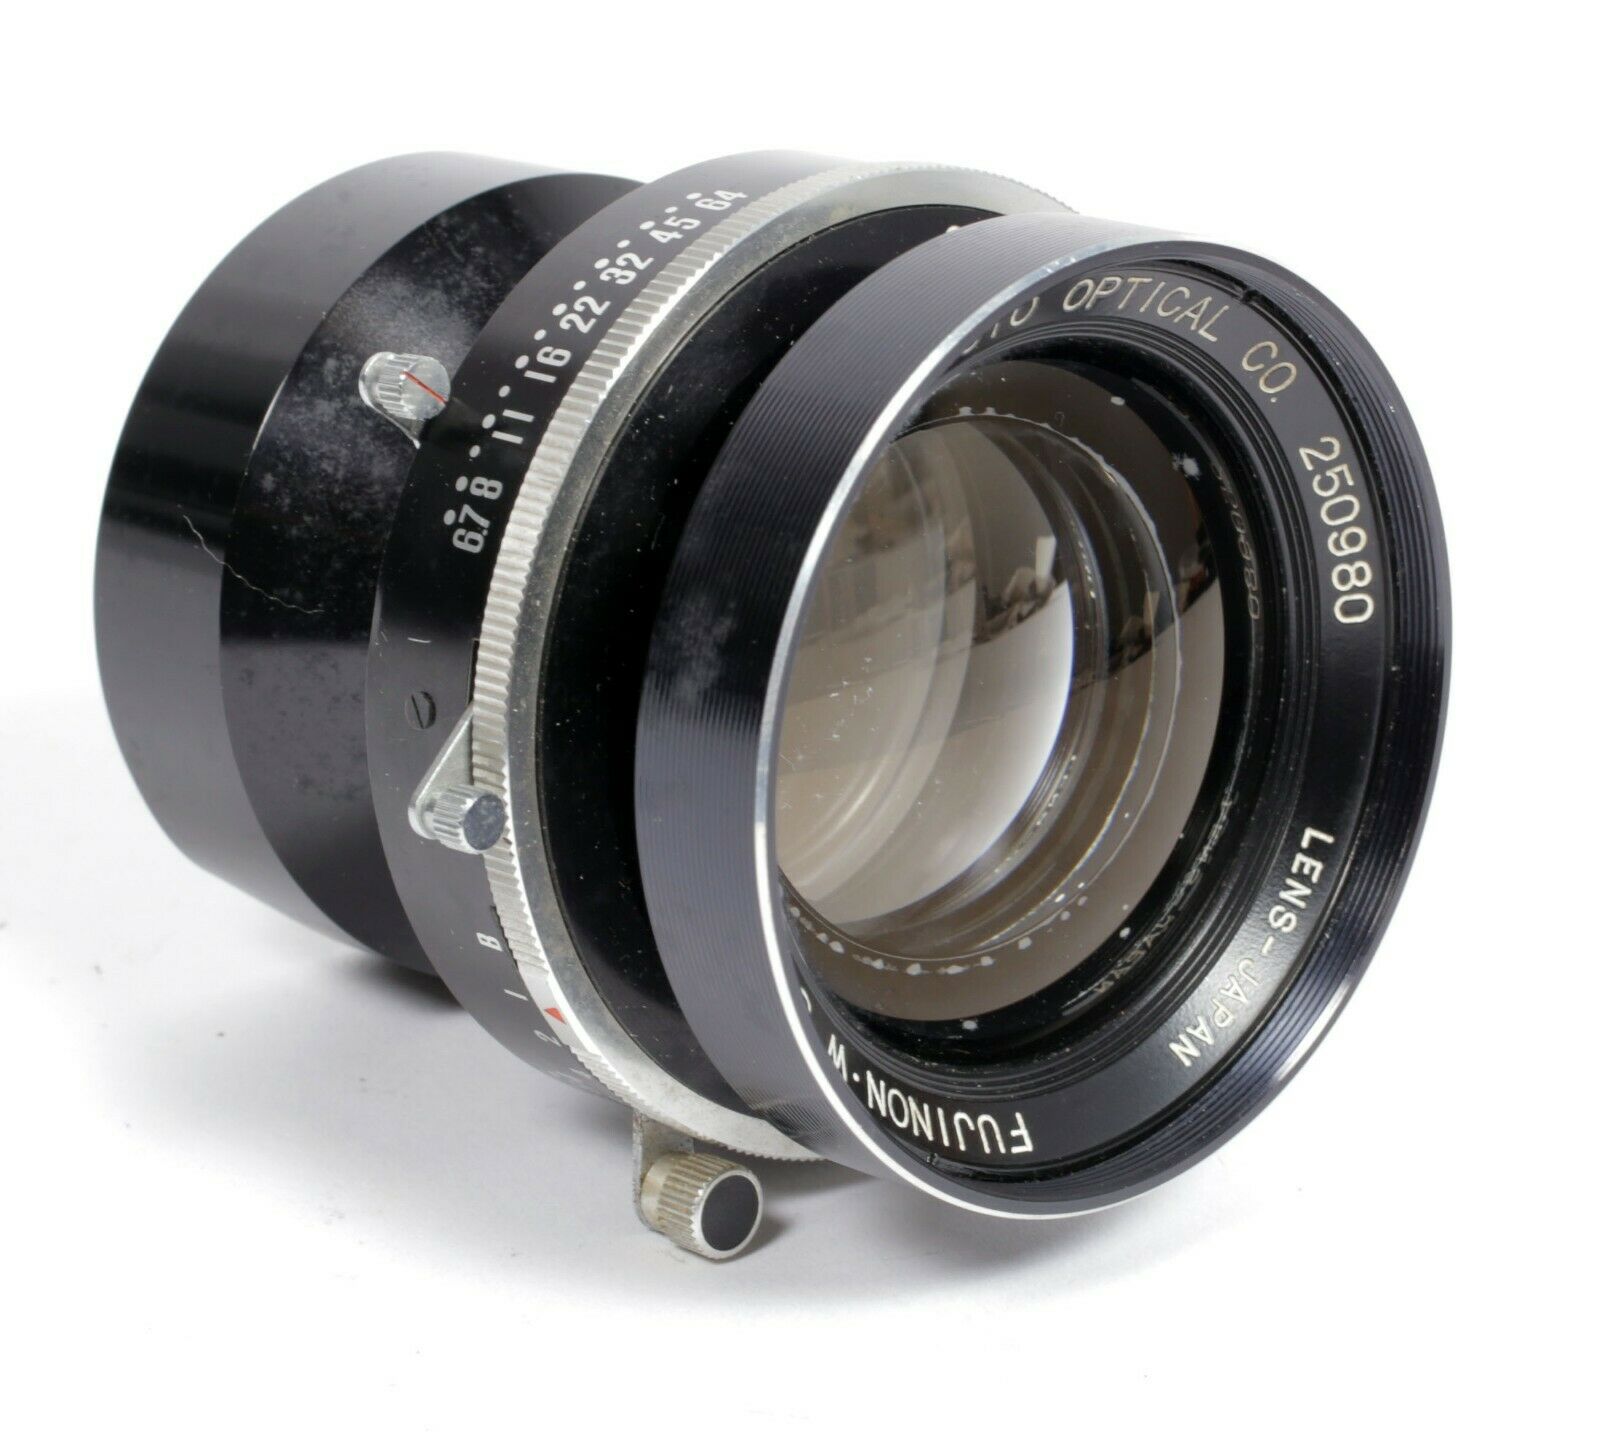 Fuji Fujinon WS 250mm  Lens in Seiko #1 (Covers 8X10) 